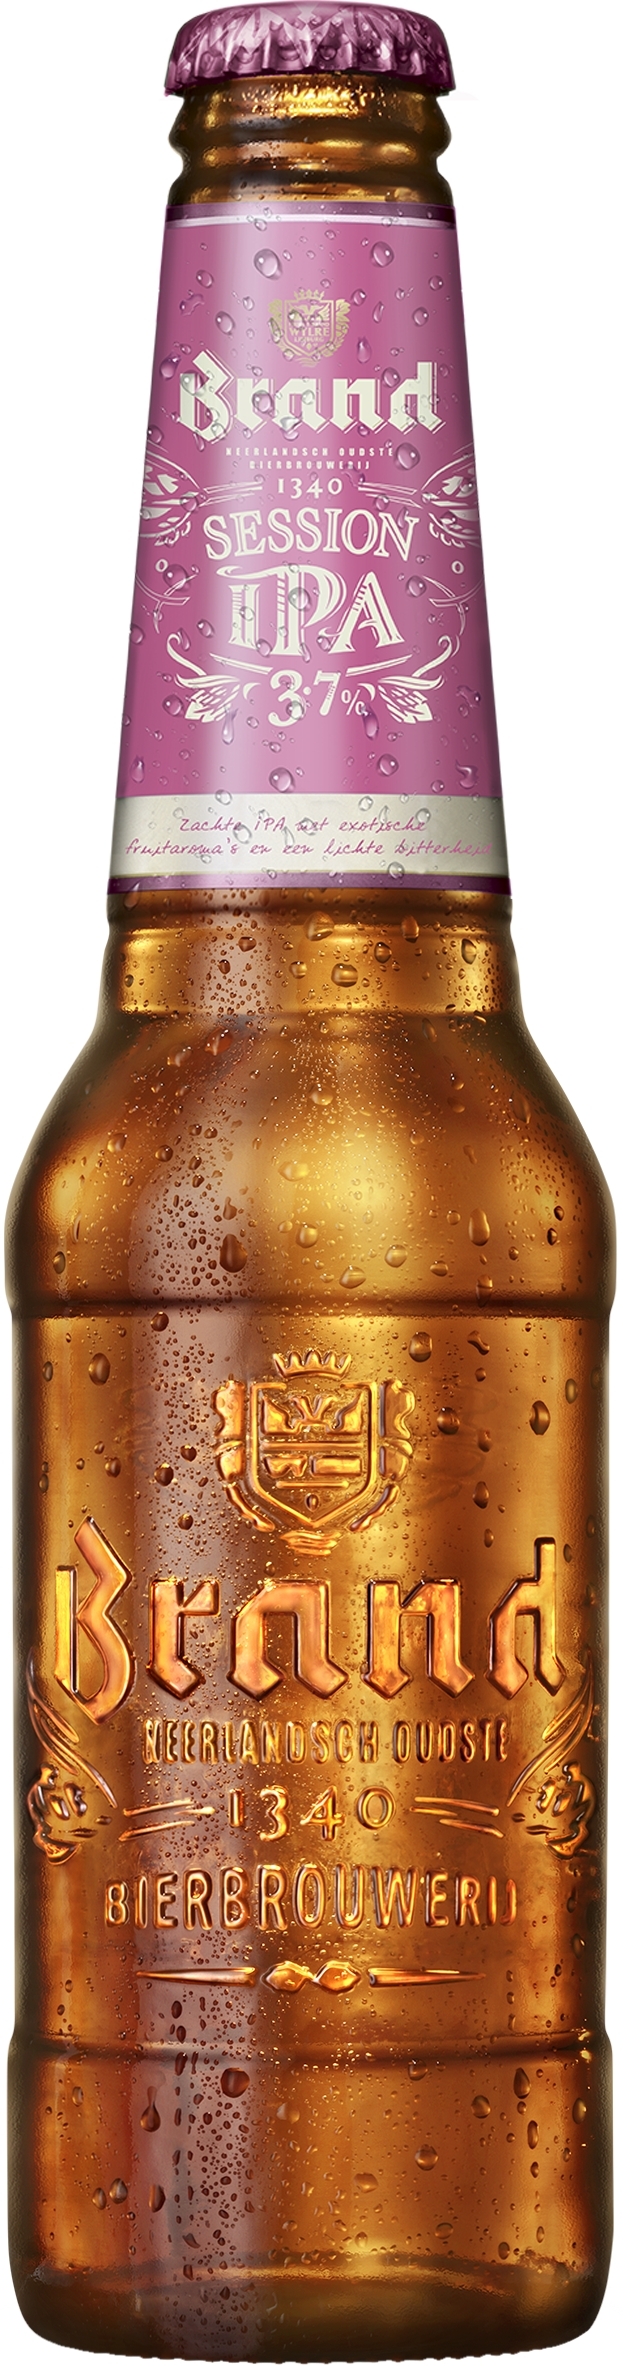 70955 Brand session IPA bier flesjes 24x30 cl